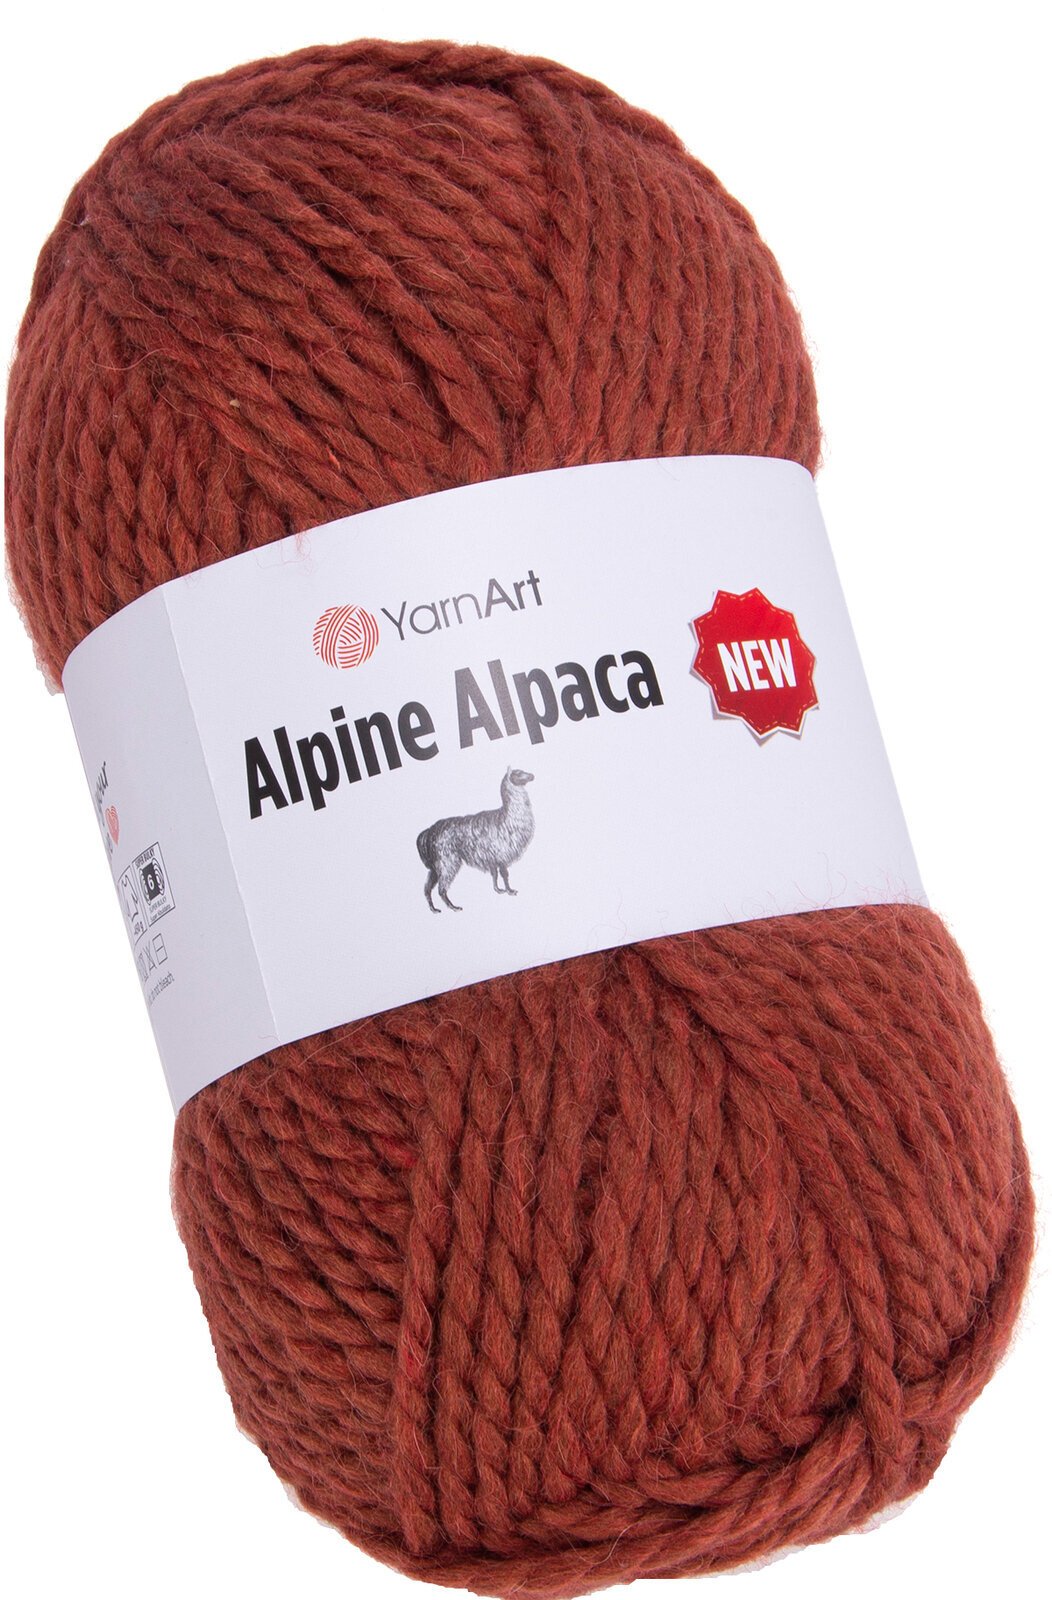 Breigaren Yarn Art Alpine Alpaca New 1452